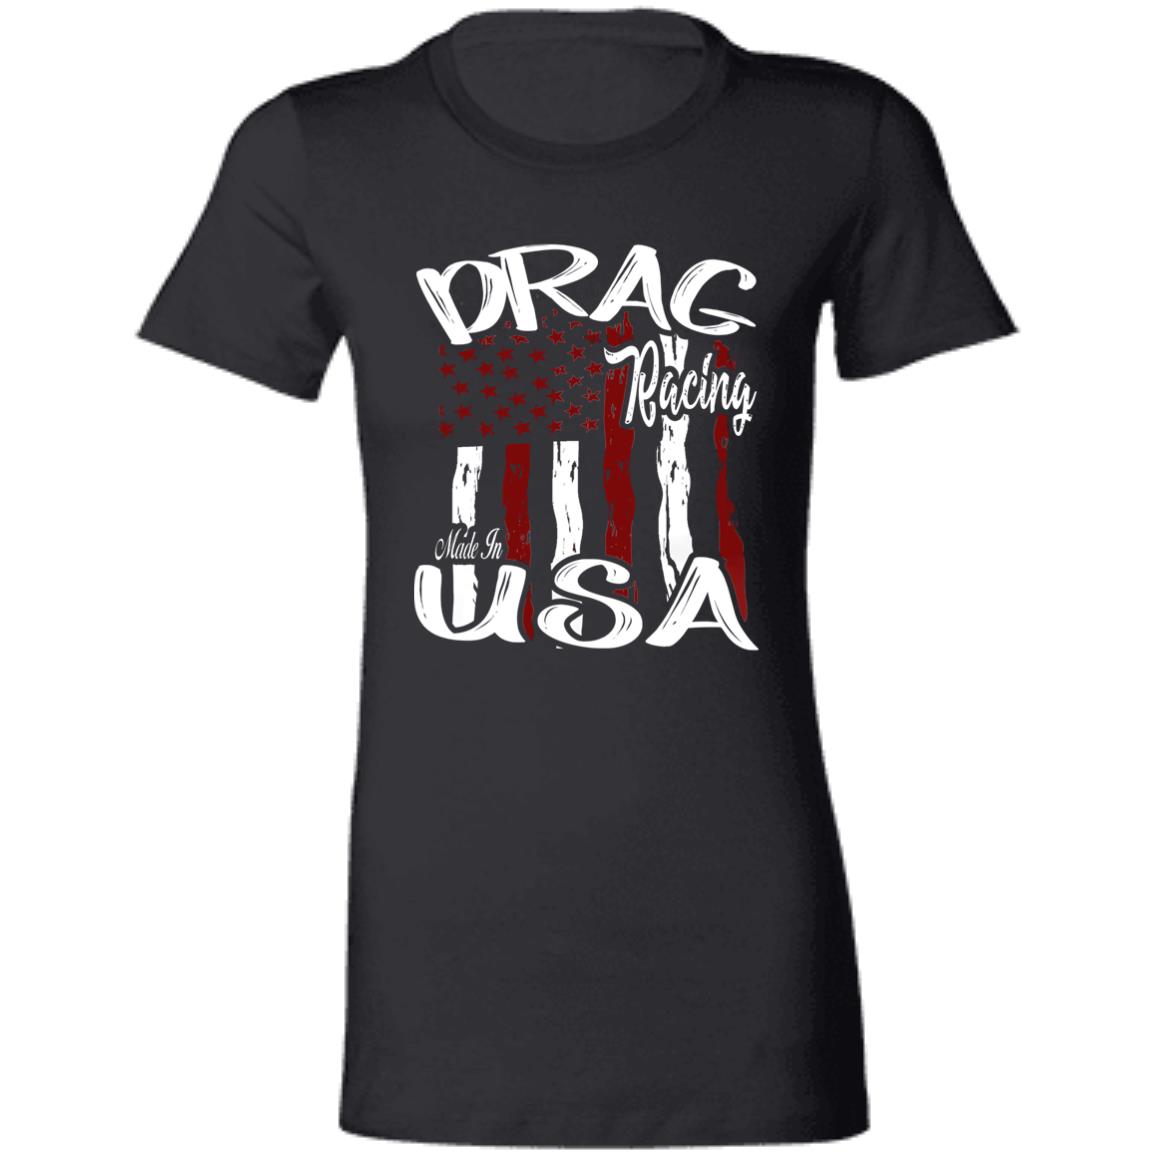 Drag Racing Made In USA Ladies' Favorite T-Shirt